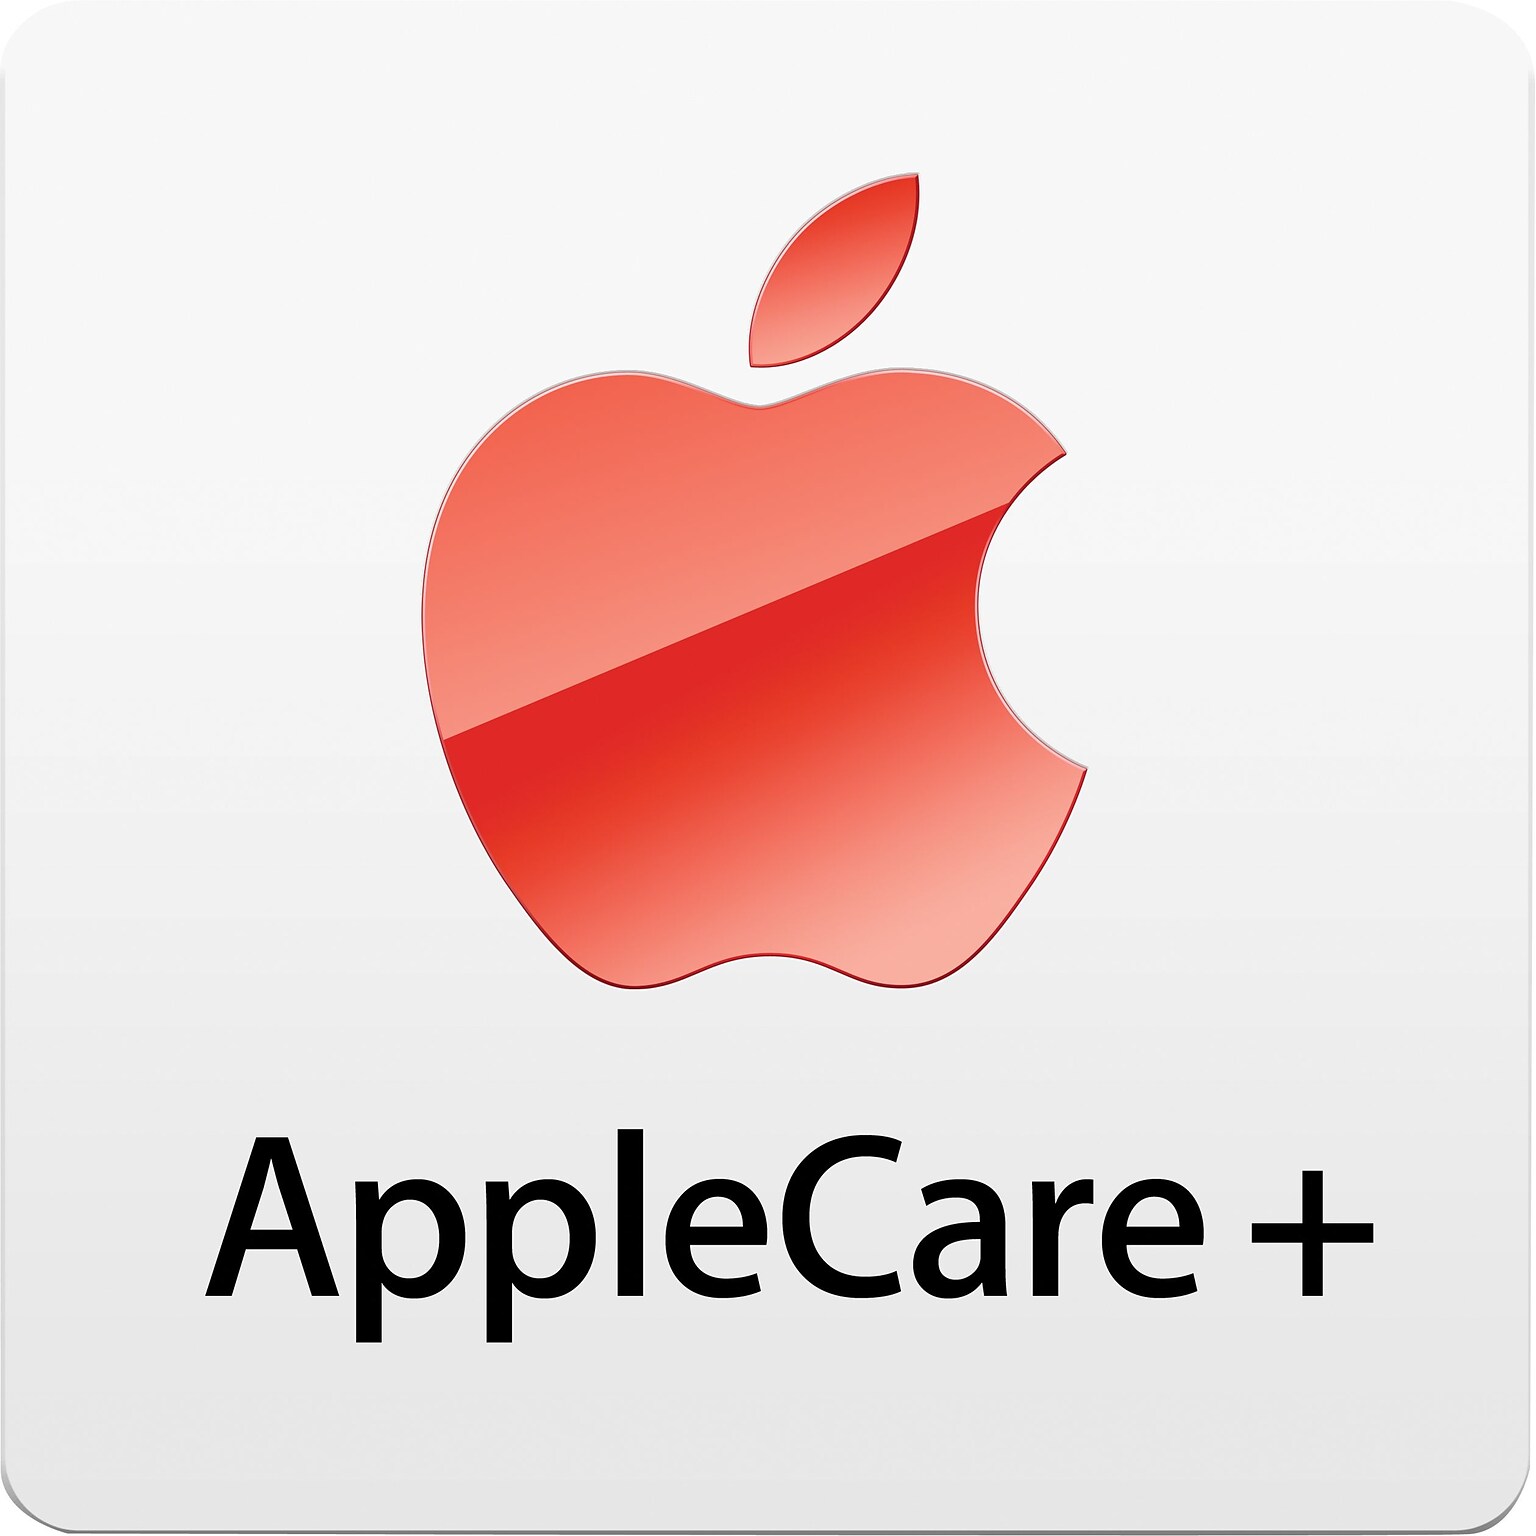 AppleCare+ 2-year Protection Plan for iPad mini with Retina Display, Wi-Fi 64GB, Silver